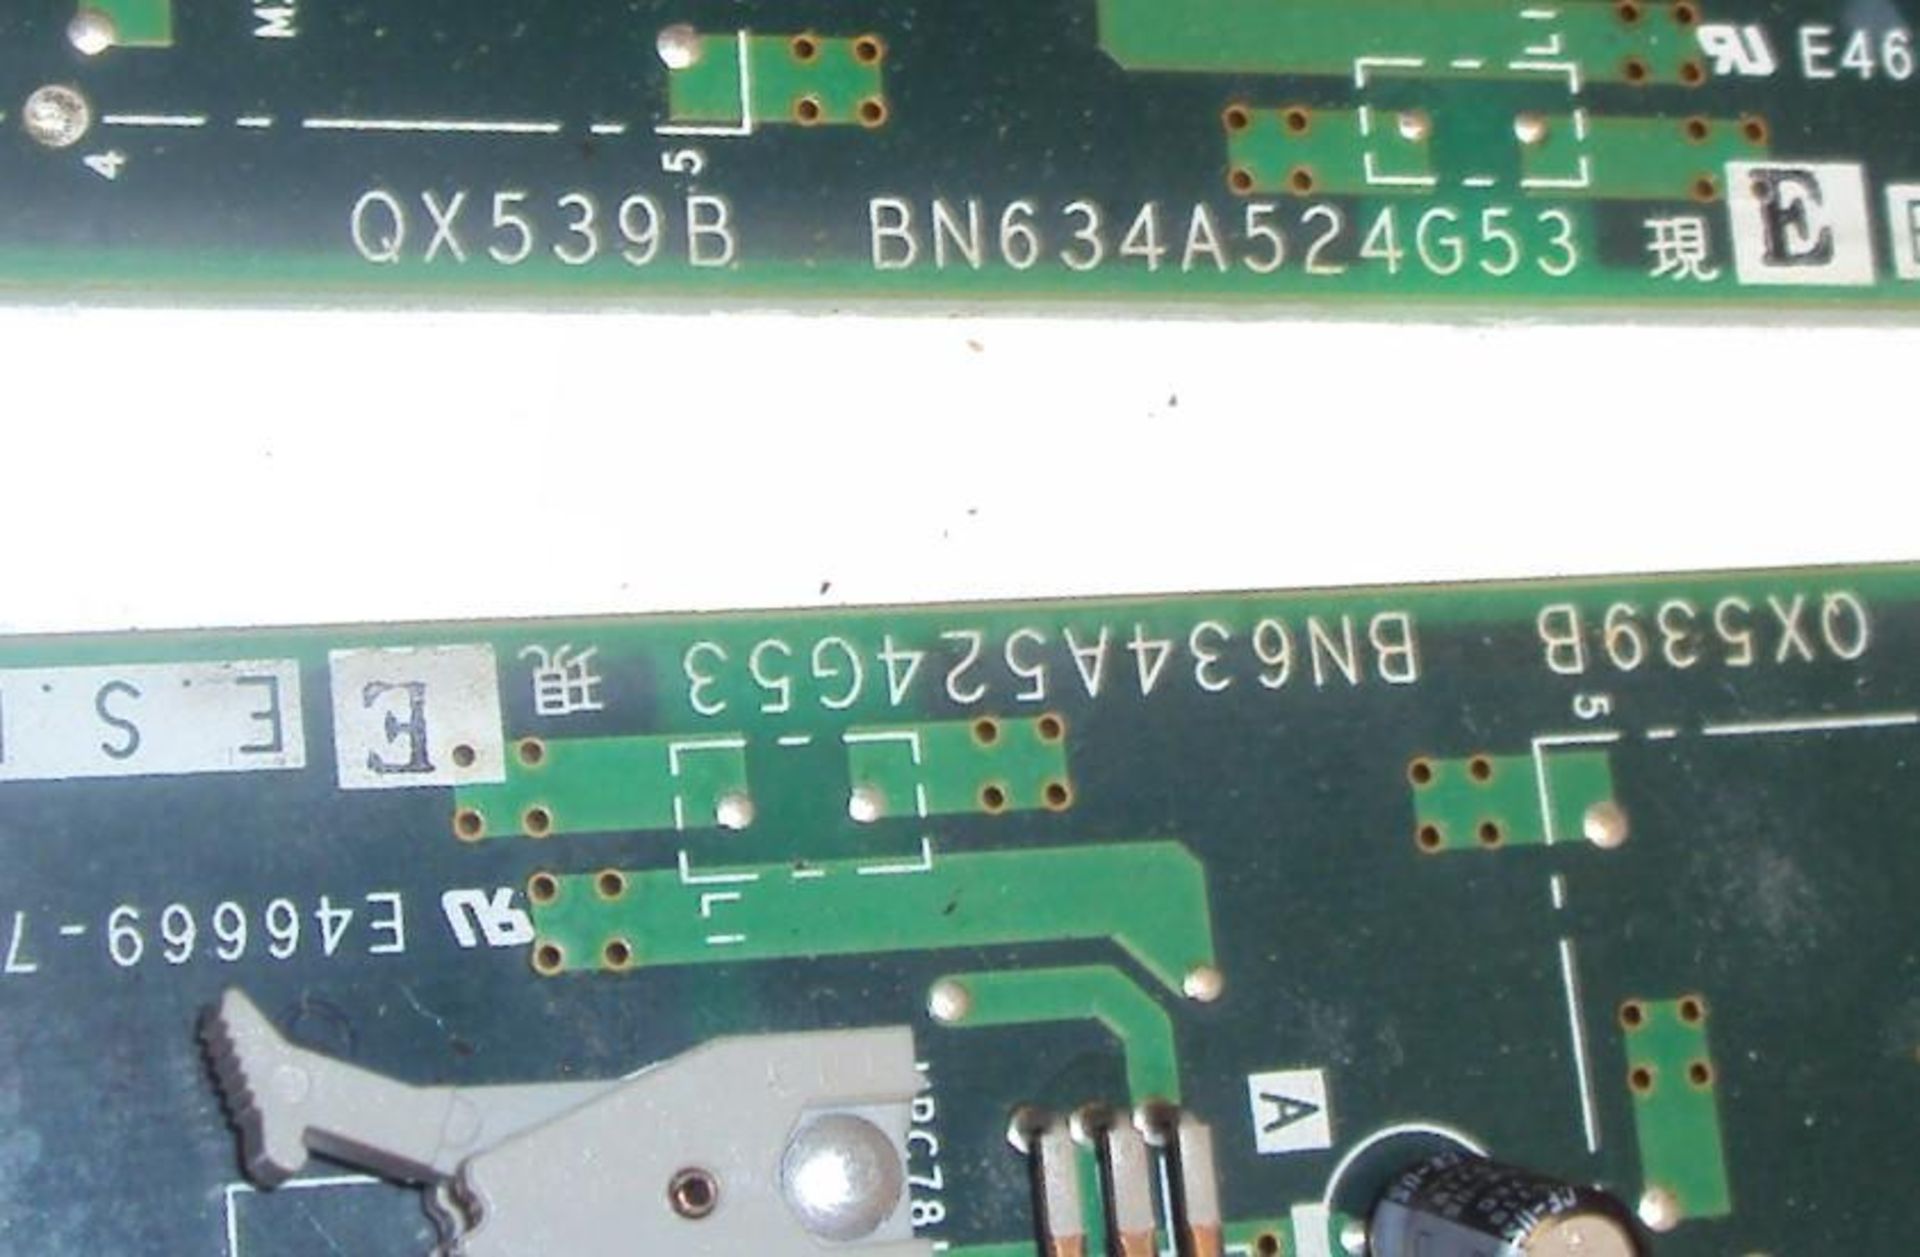 (2) Mitsubishi Meldas Qx539B I/O CNC Control Board BN634A524G53 - Image 5 of 5